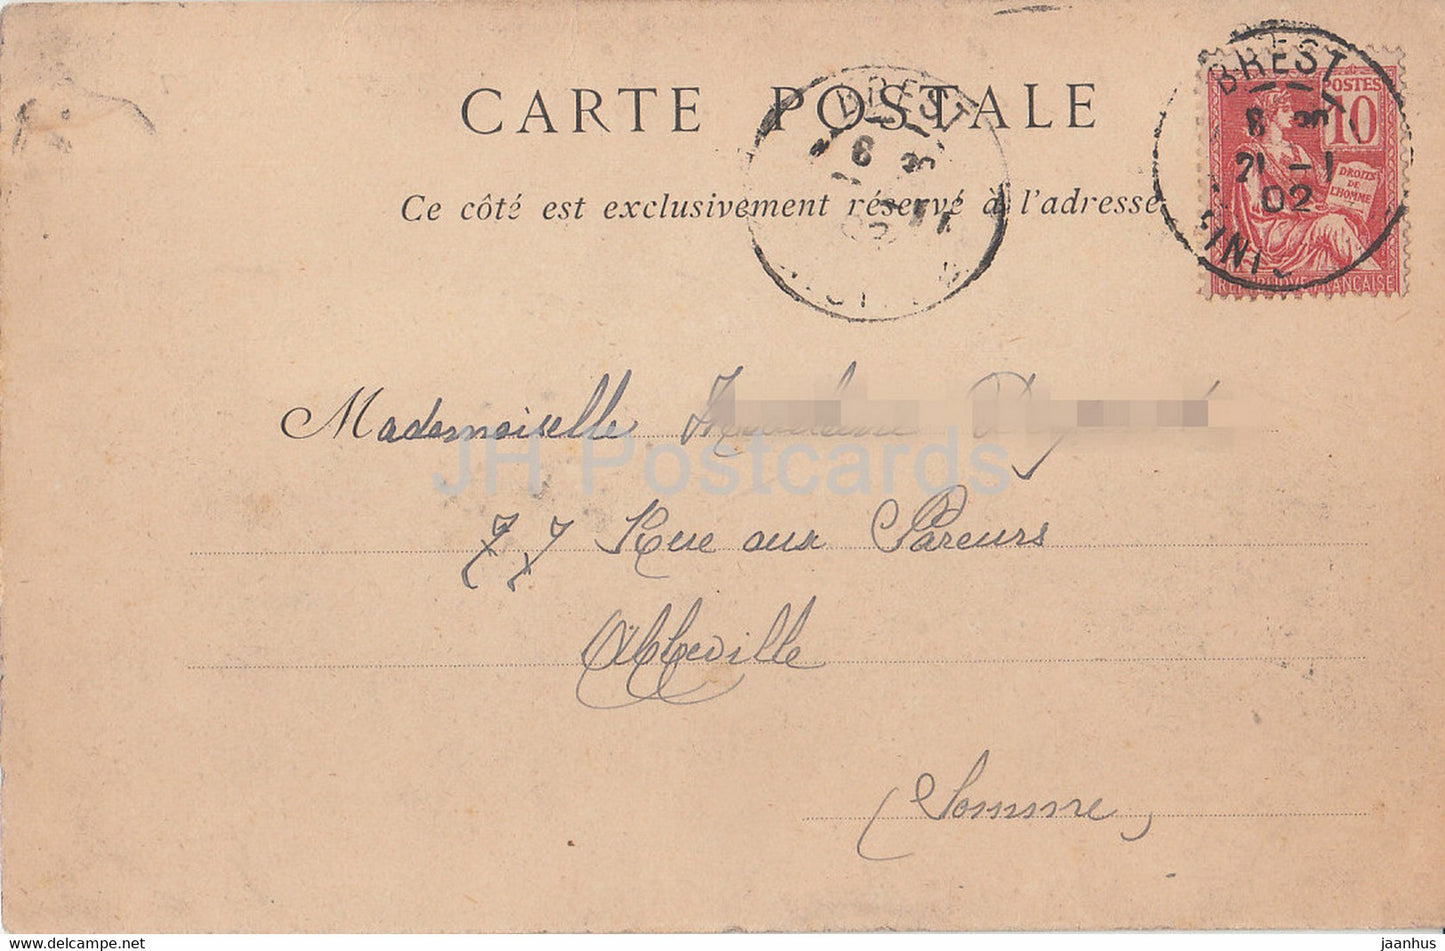 La Jetee un Jour de Tempete - 9 - Leuchtturm - alte Postkarte - 1902 - Frankreich - gebraucht